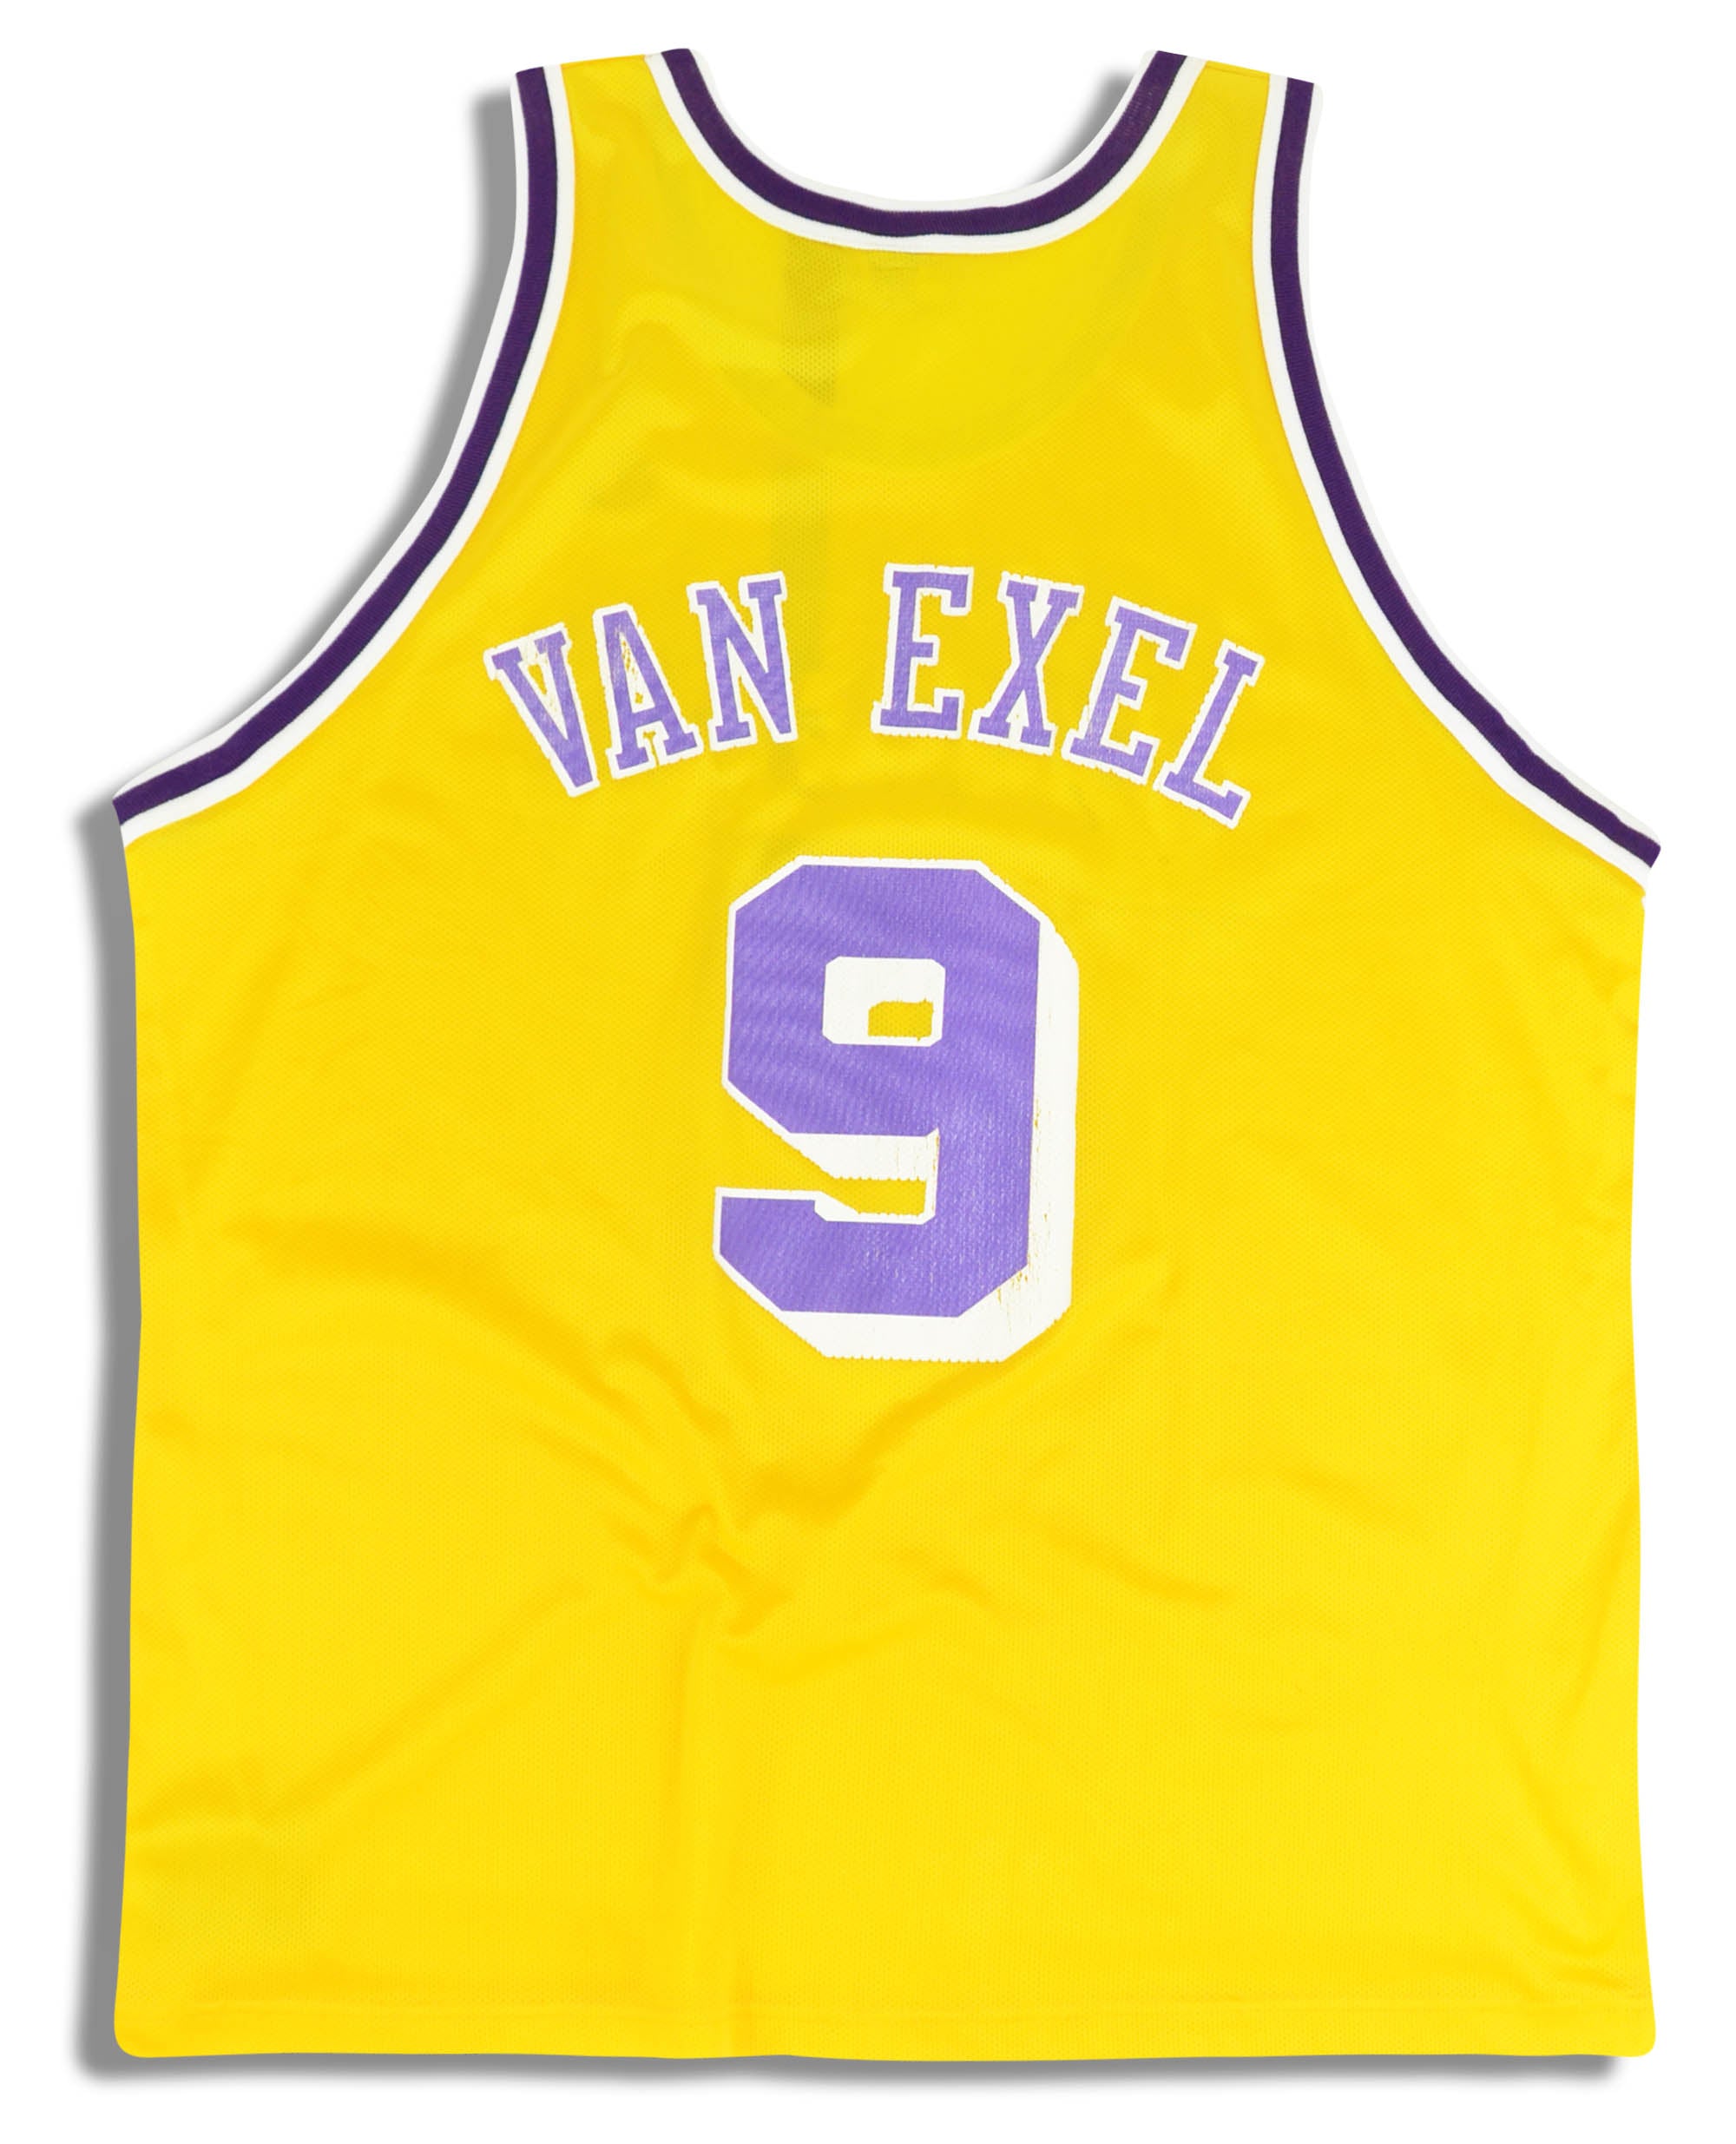 1995-98 LA LAKERS VAN EXEL #9 CHAMPION JERSEY (HOME) XL